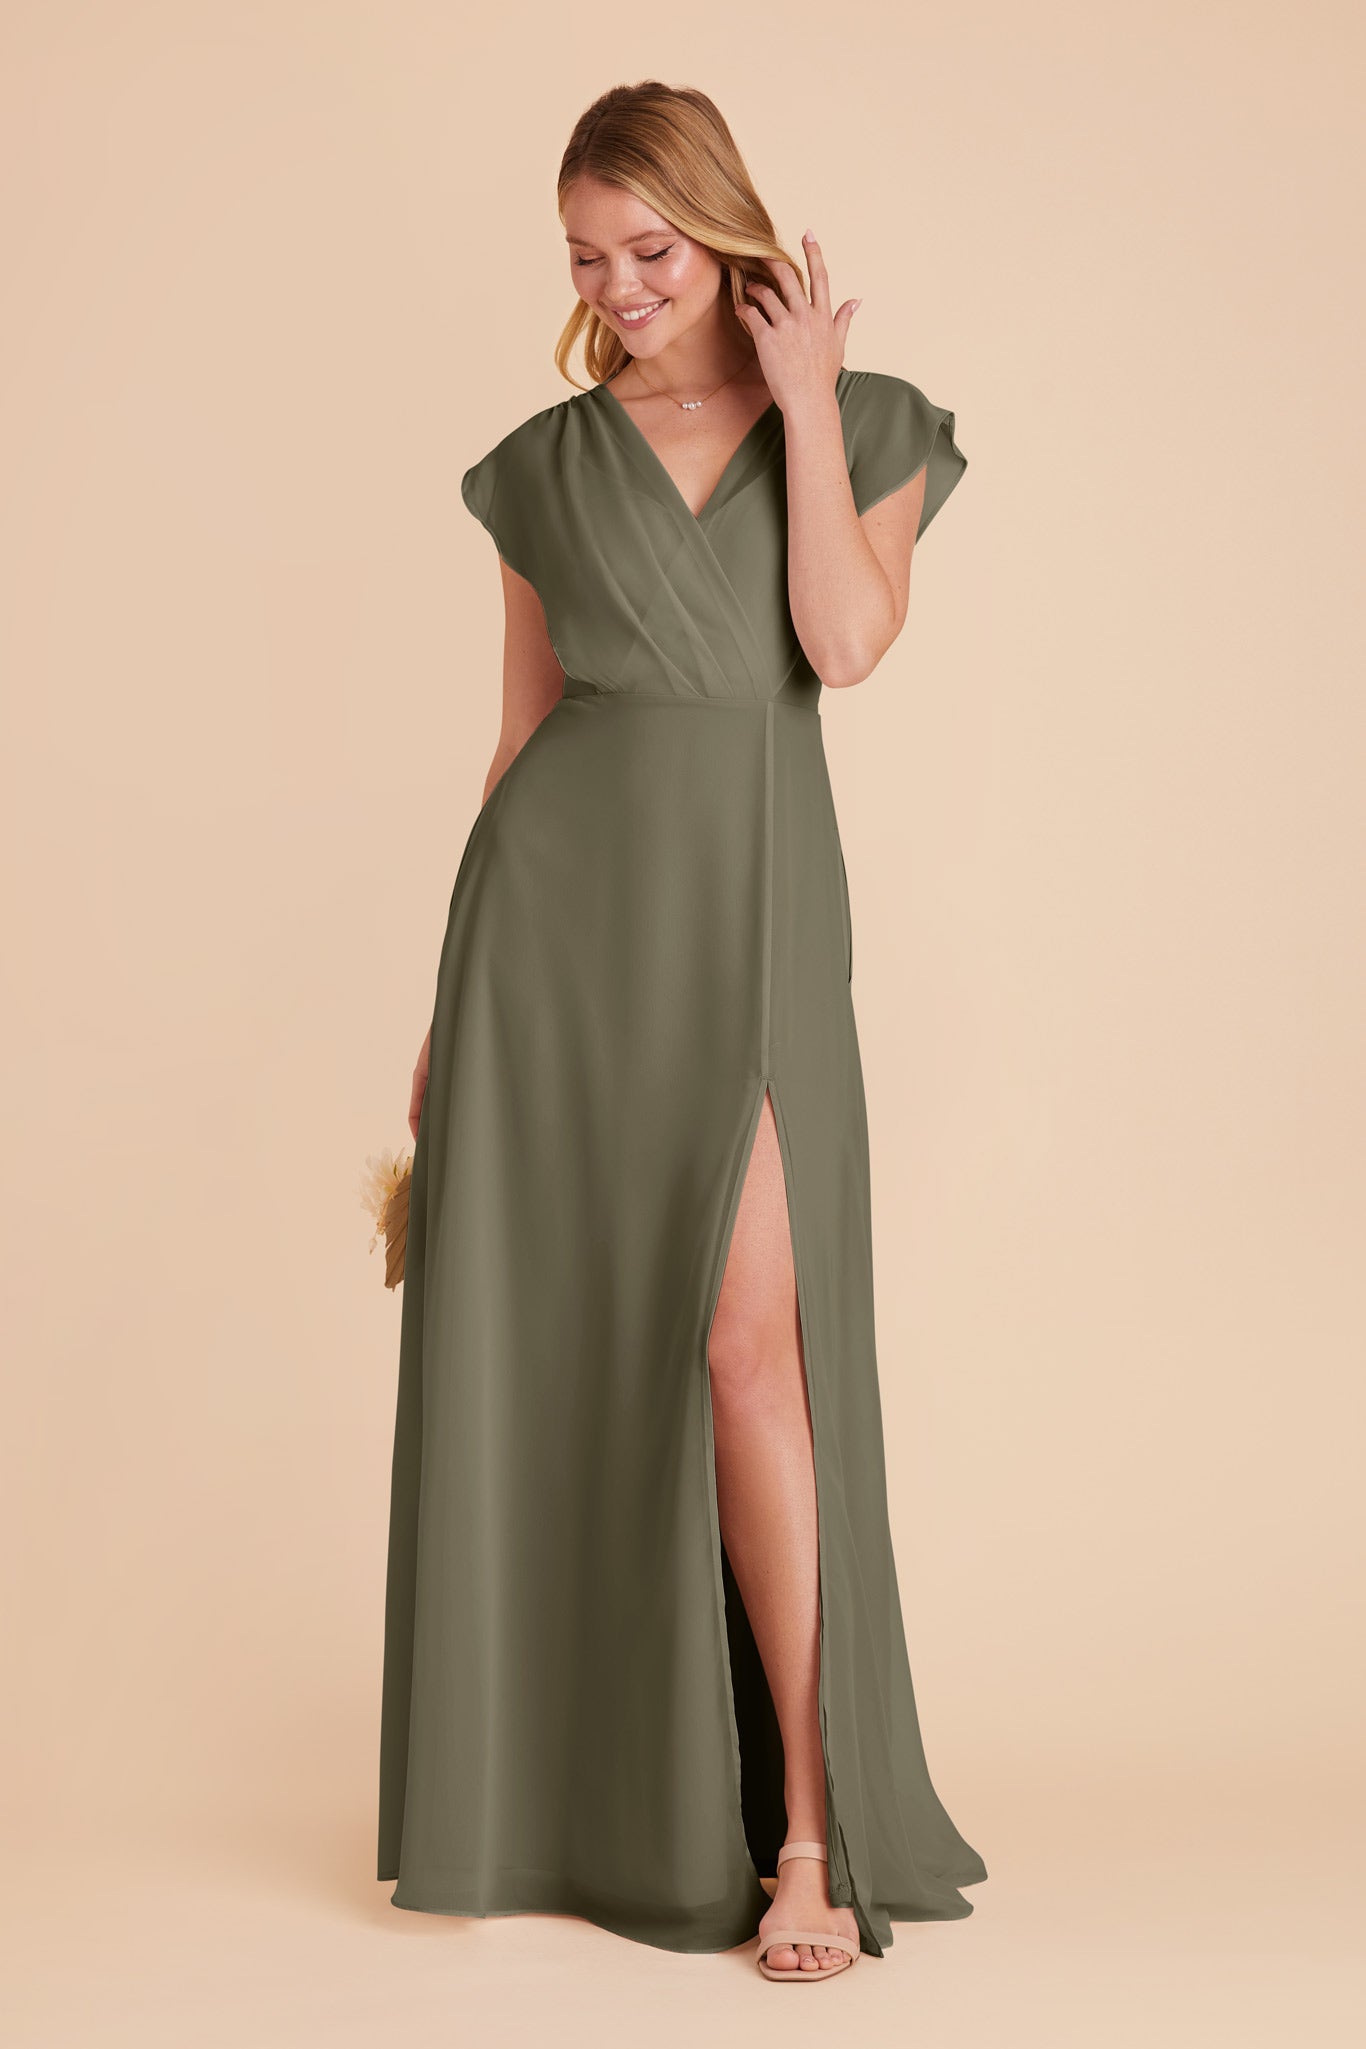 Violet Chiffon Dress - Moss Green